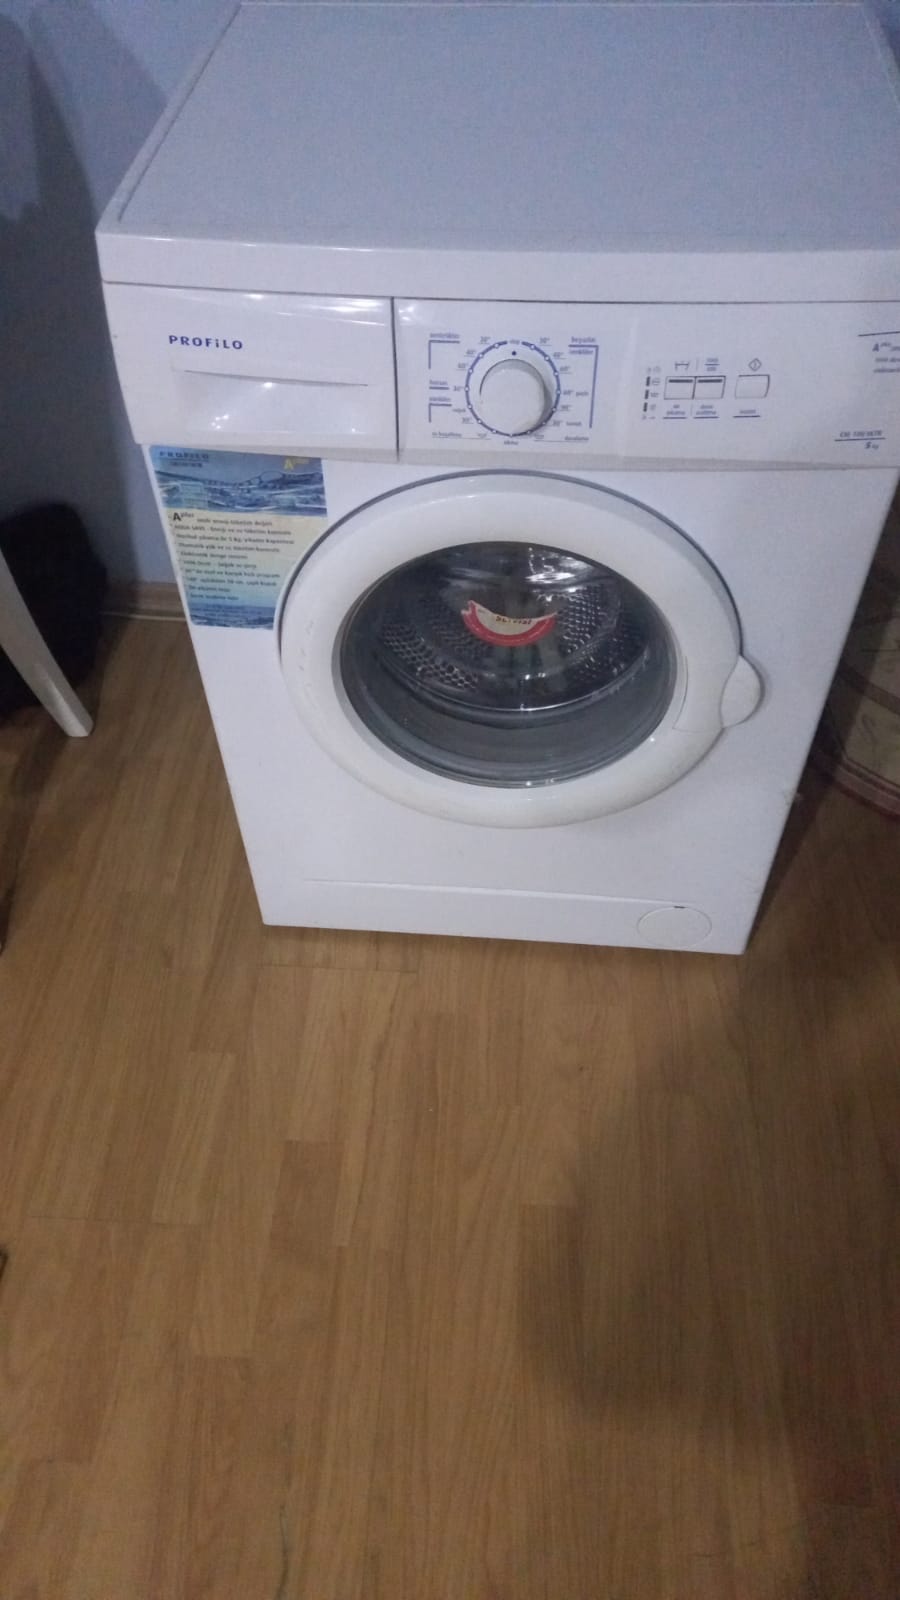 2.el profilo çamaşır makinesi